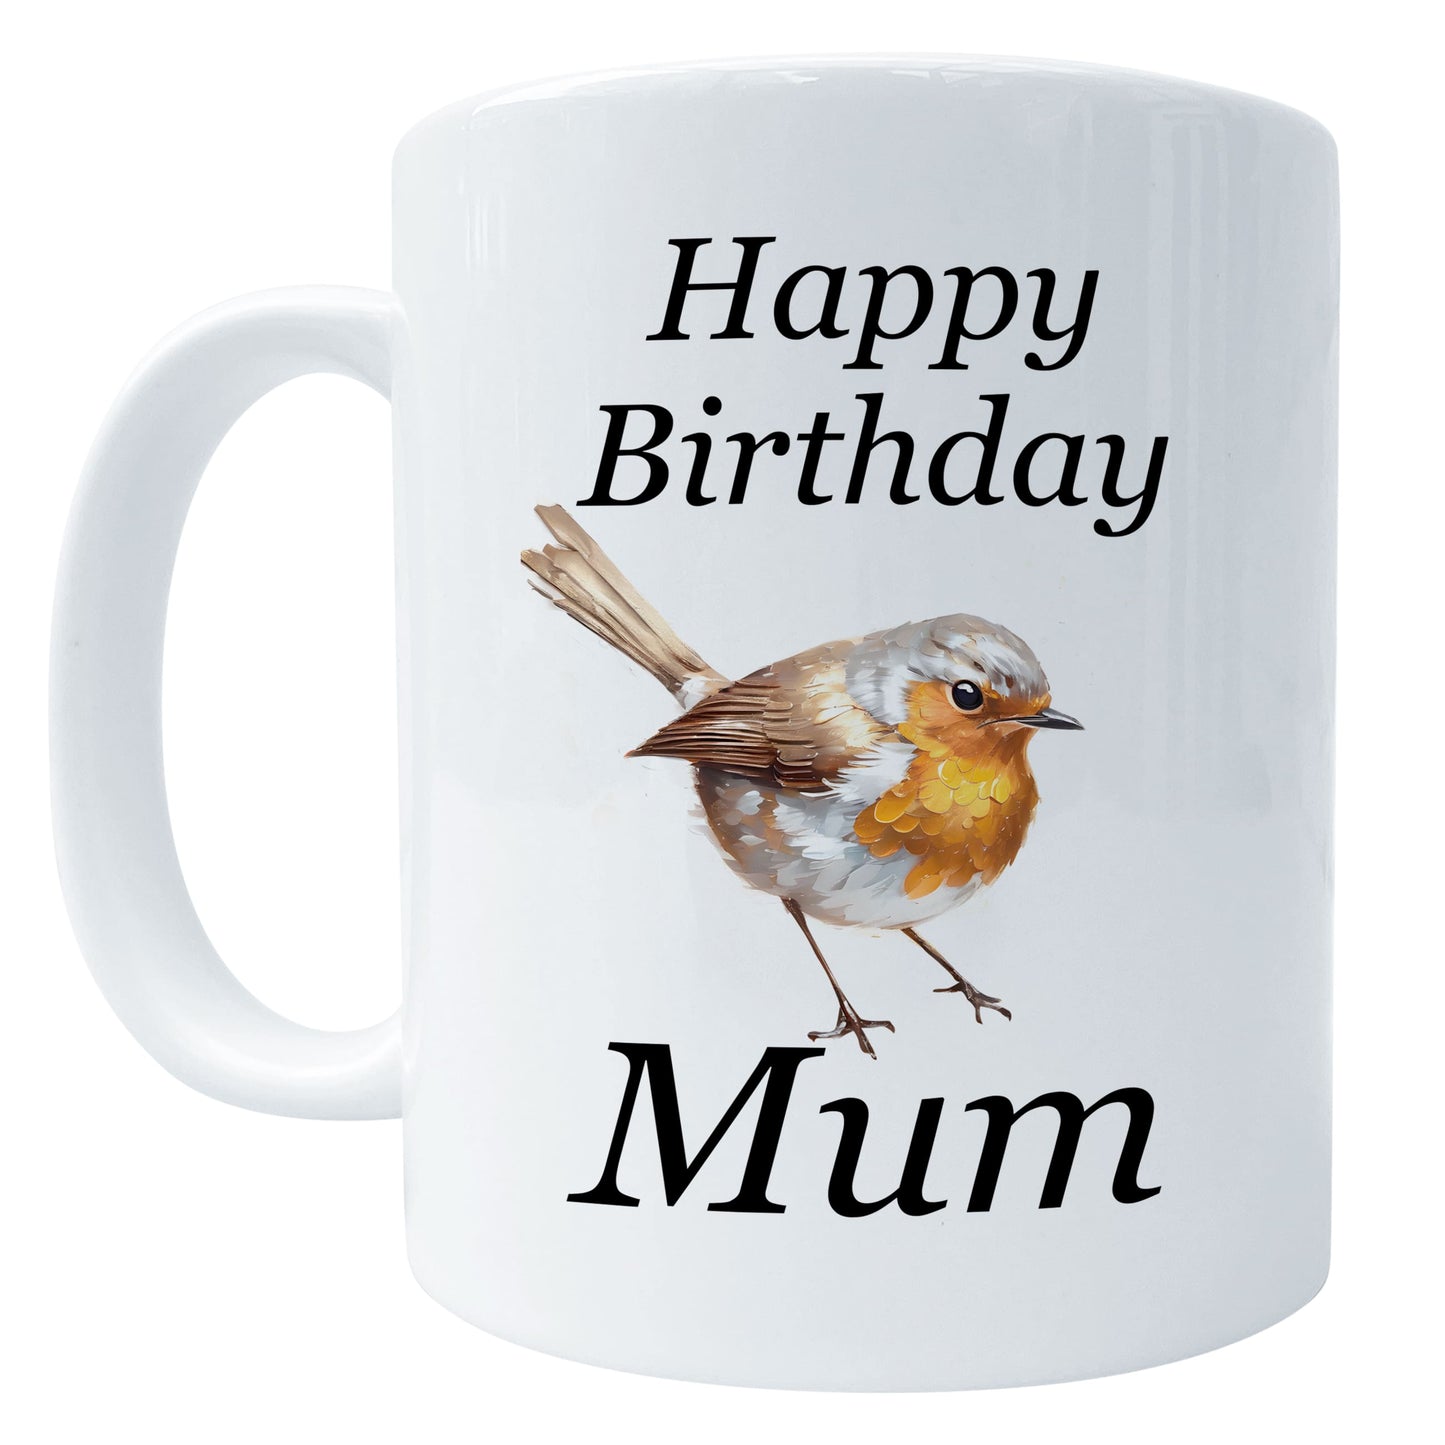 Happy Birthday Robin Art Mug Mum Mug